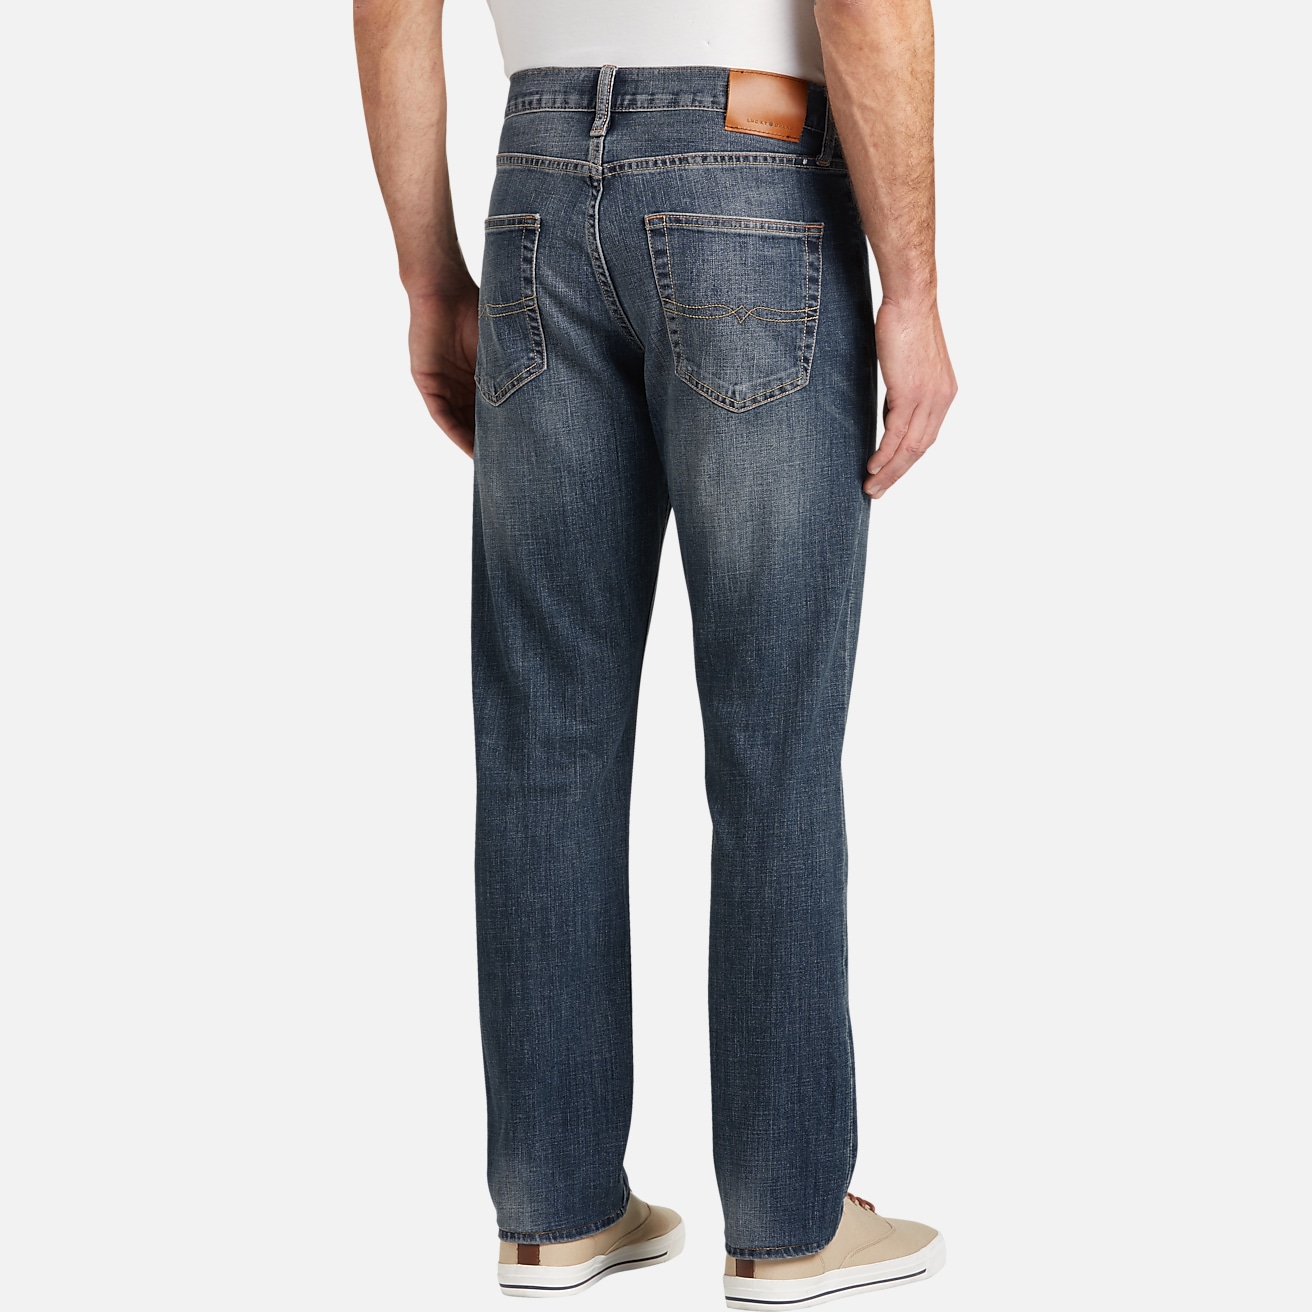 Lucky Brand 410 Regular Size Jeans for Men for sale